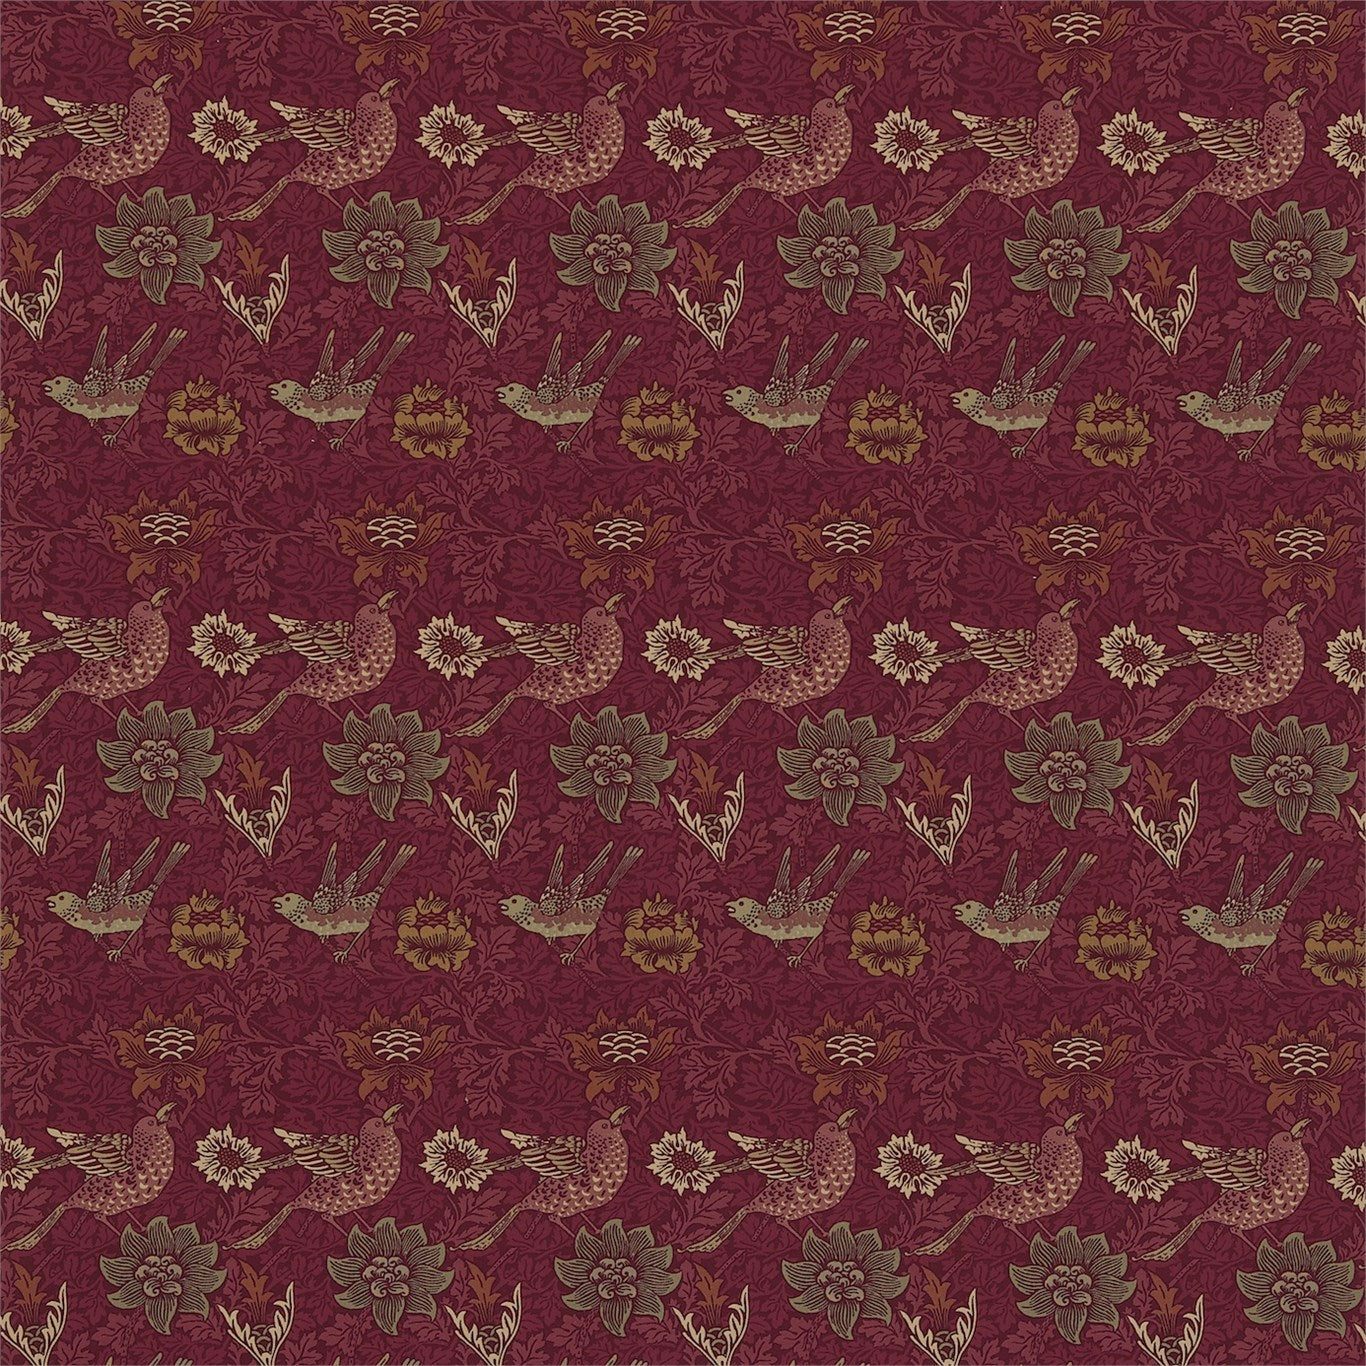 Bird & Anemone Fabric by Morris & Co. - DMFPBI202 - Red Clay